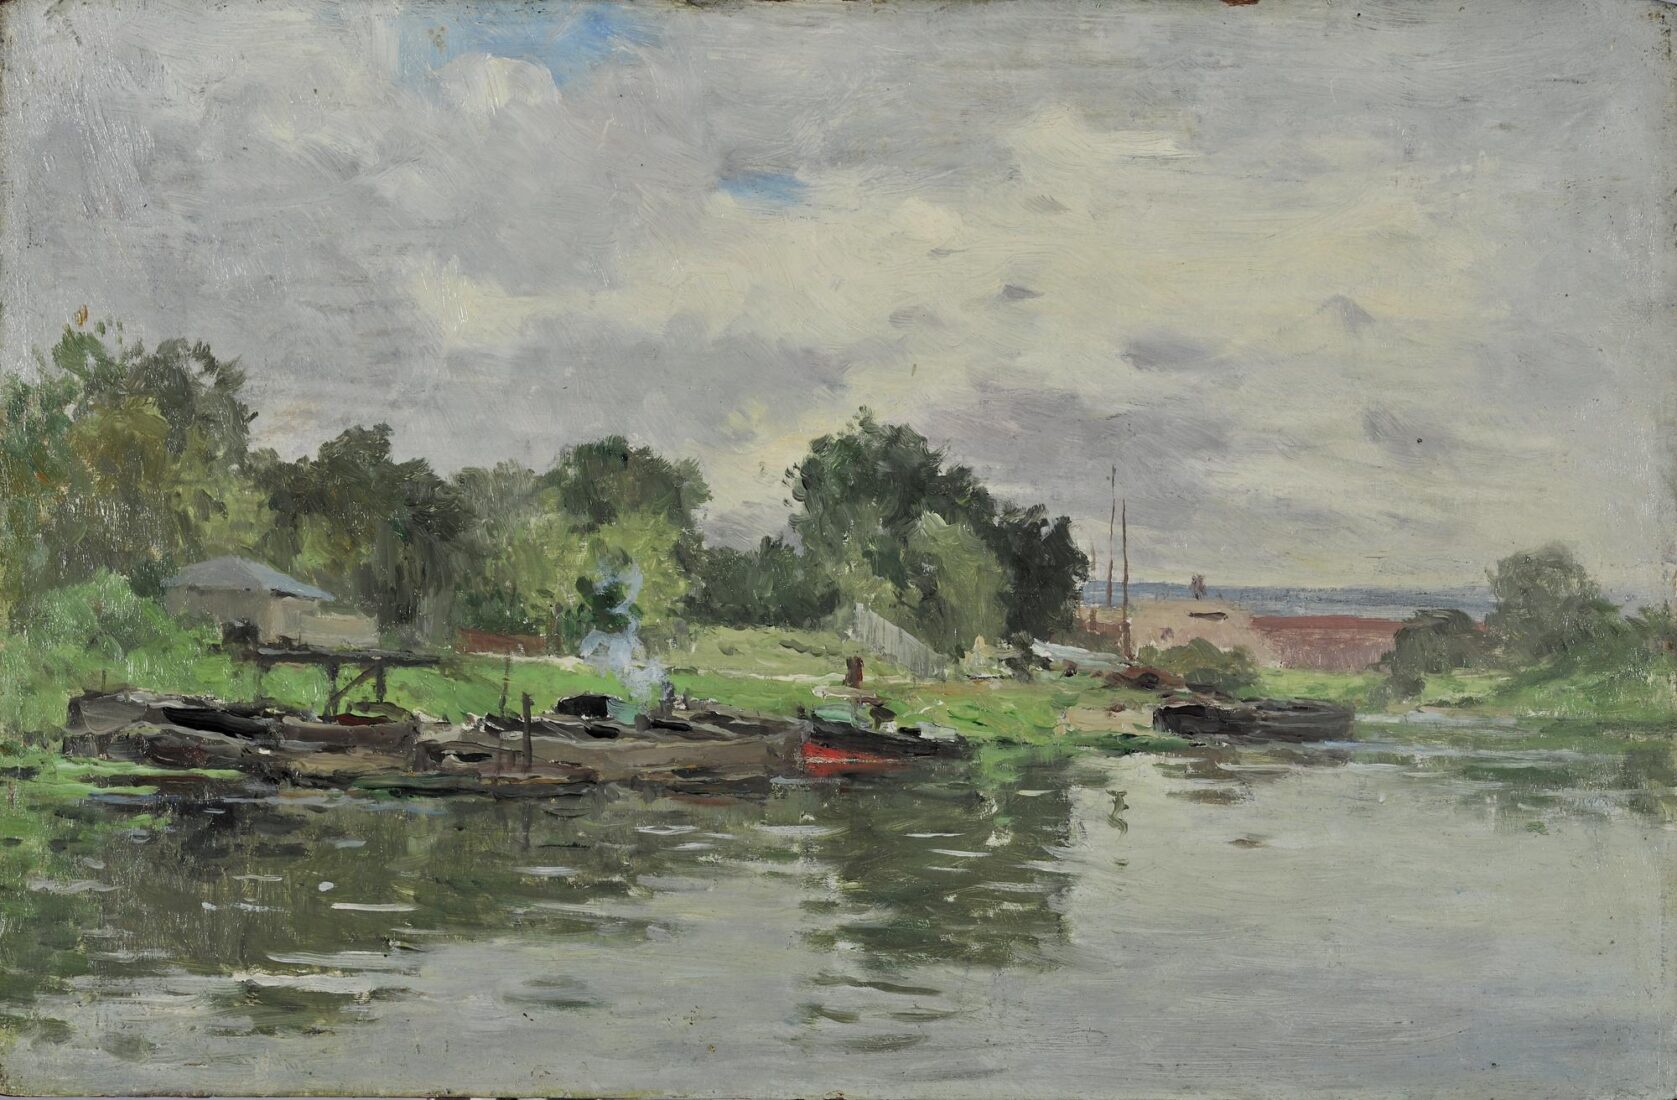 Barges on the River - Vauthier Pierre Louis Leger